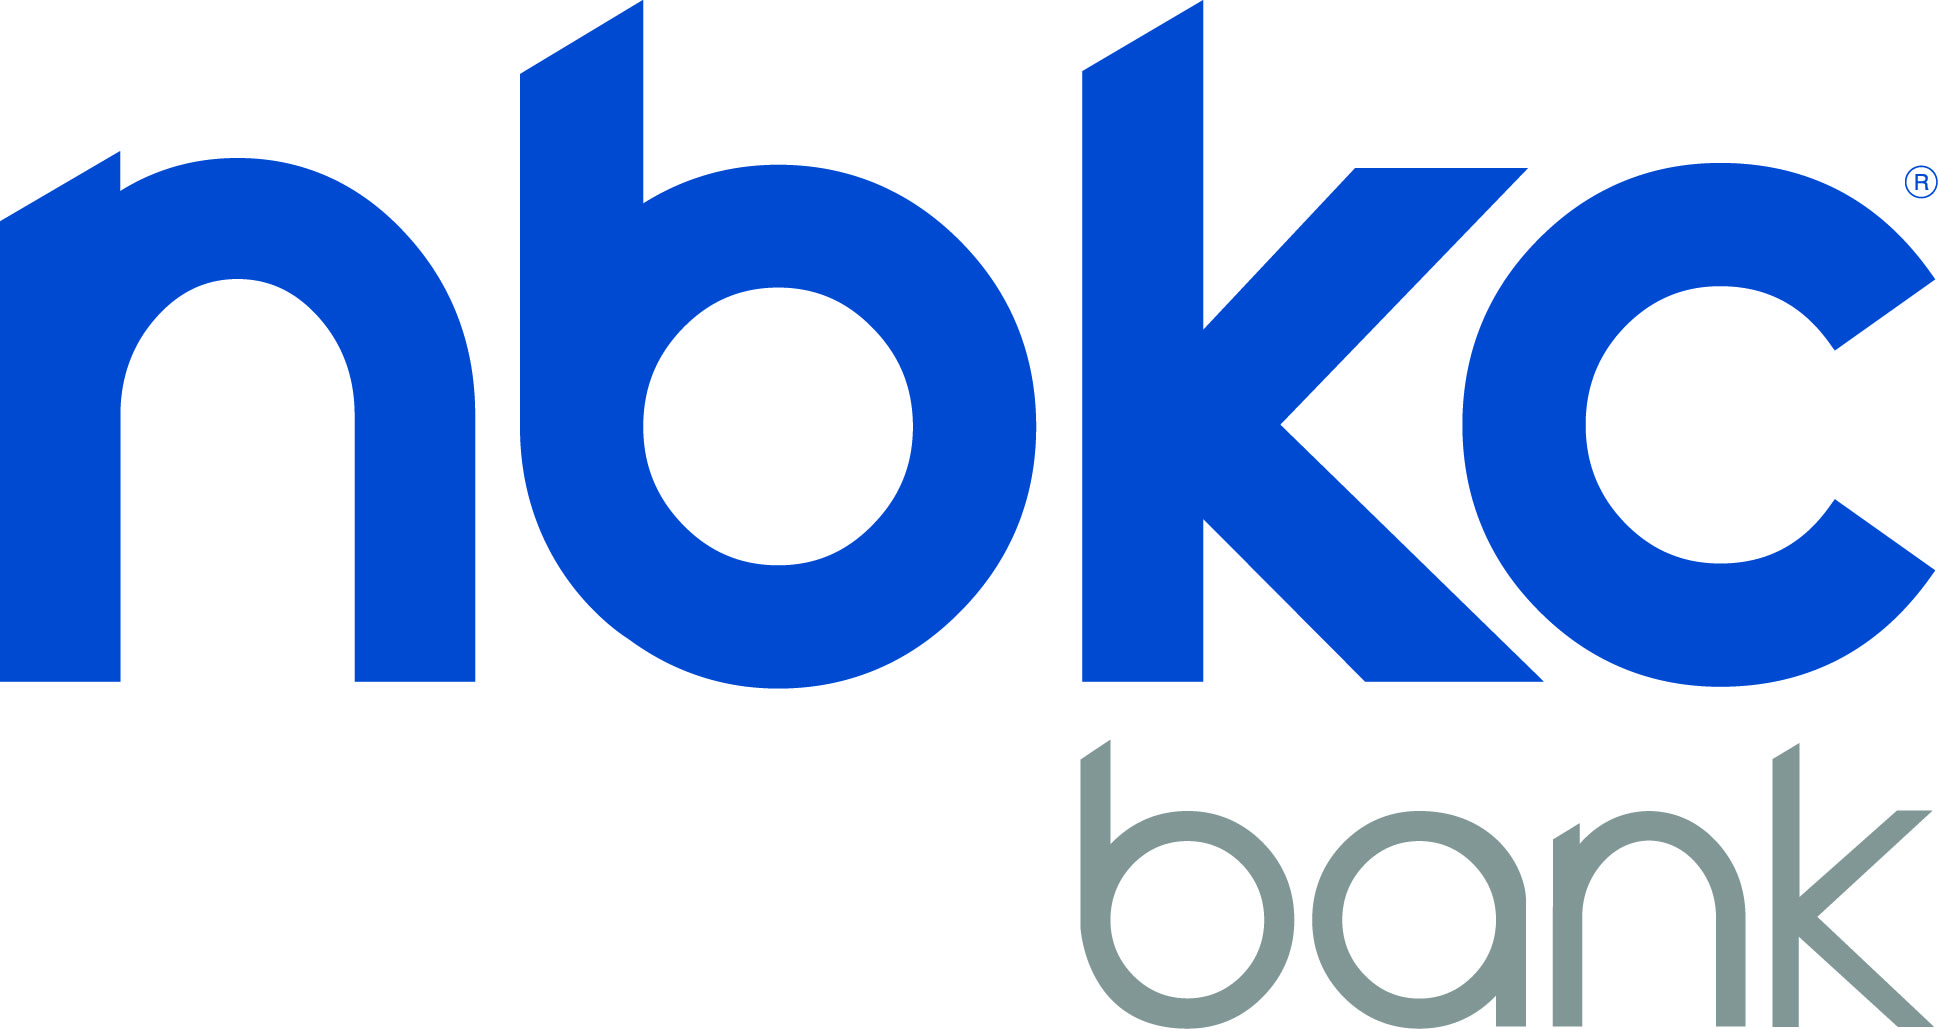 NBKC Bank logo and banner